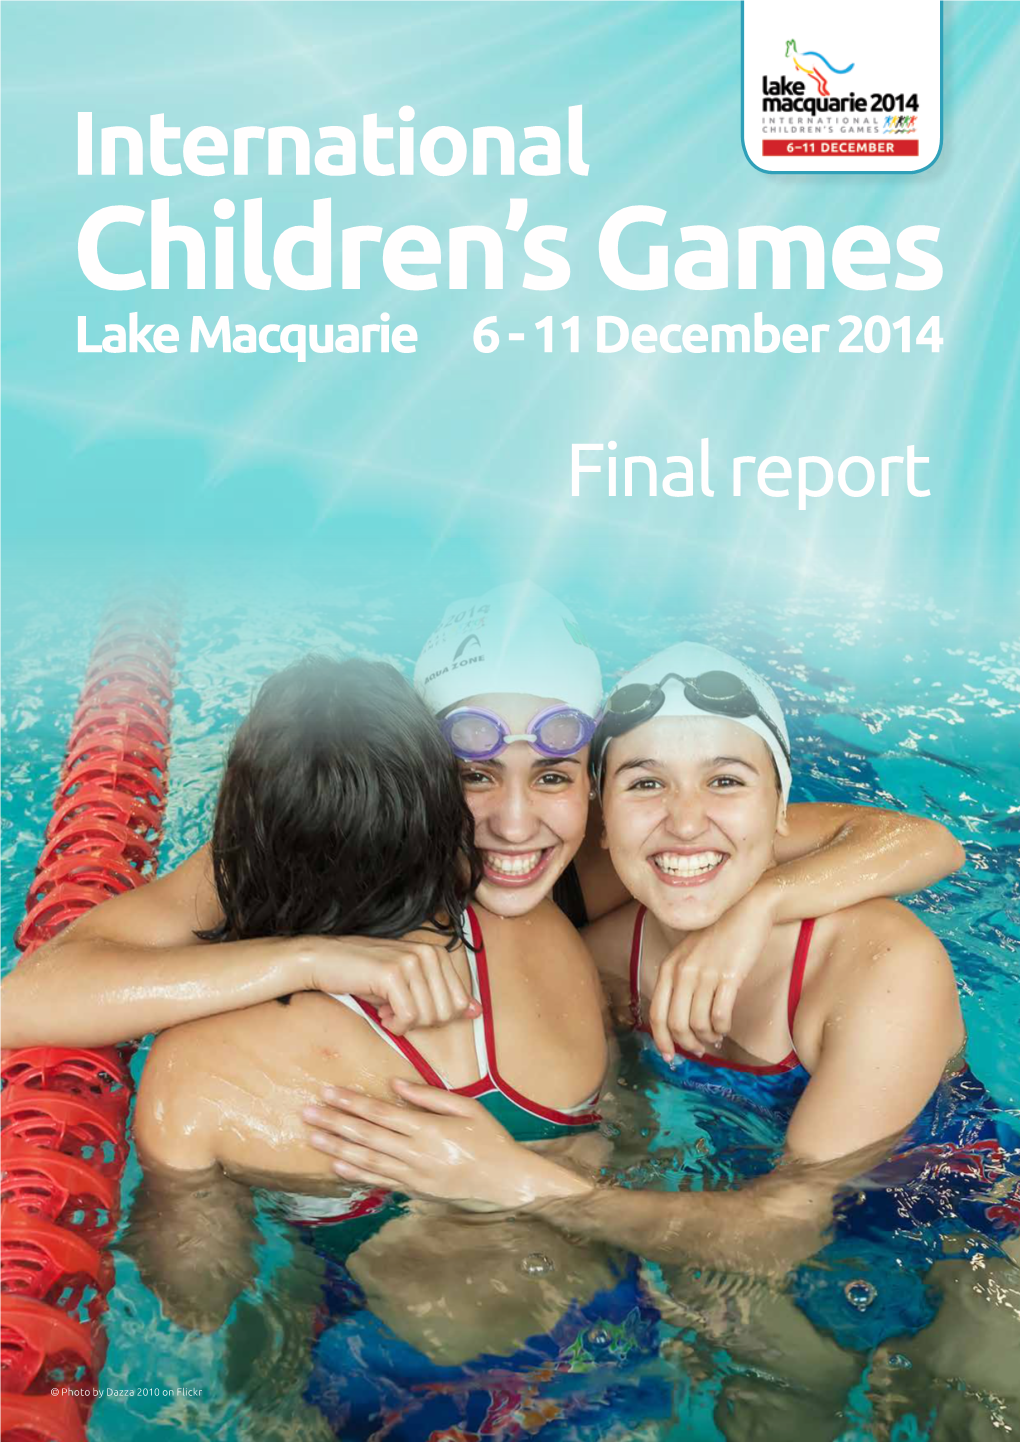 Lake Macquarie 2014 International Children's Games Final Report